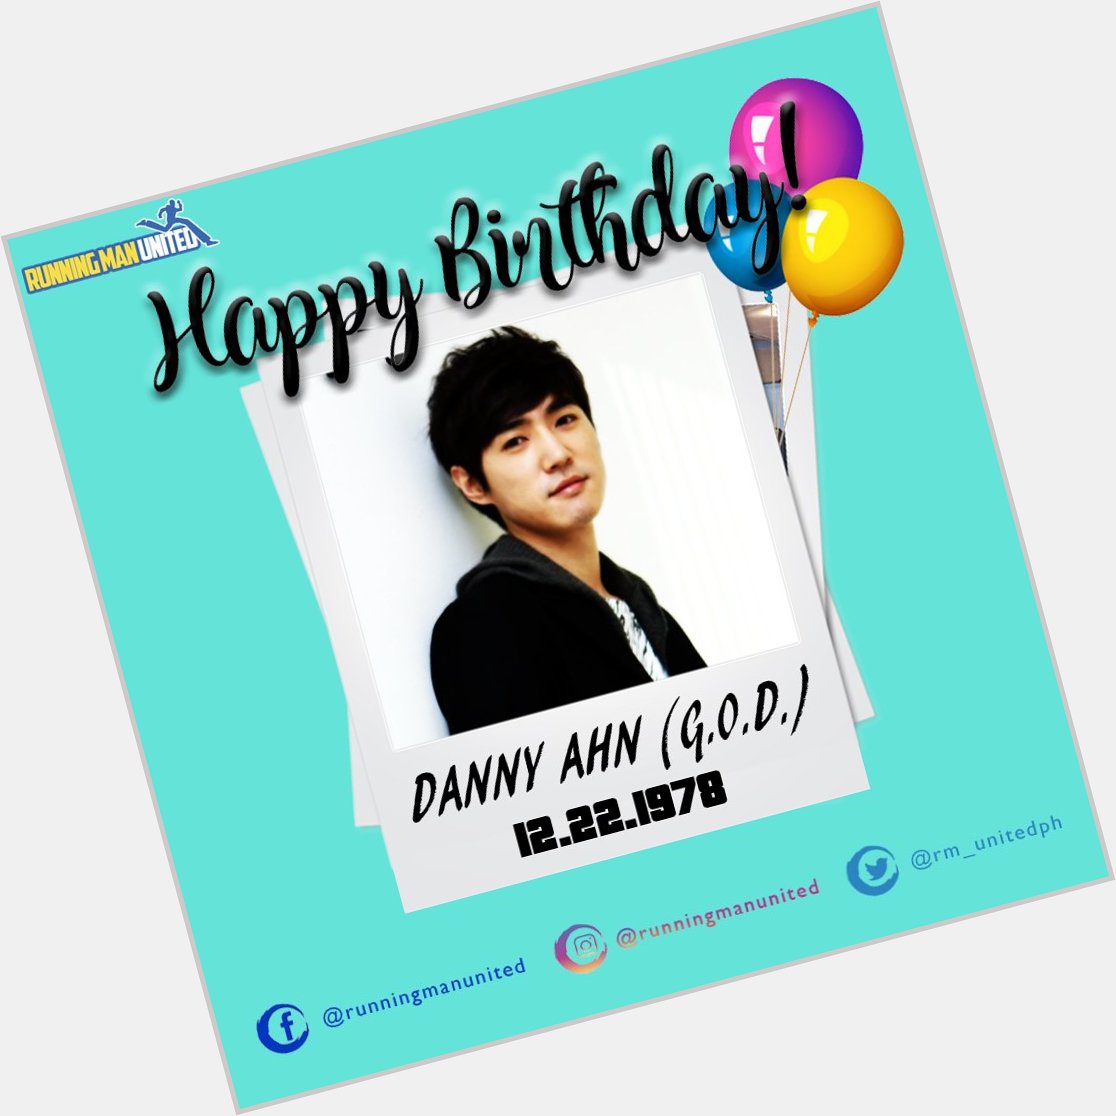 Happy Birthday Danny Ahn! 